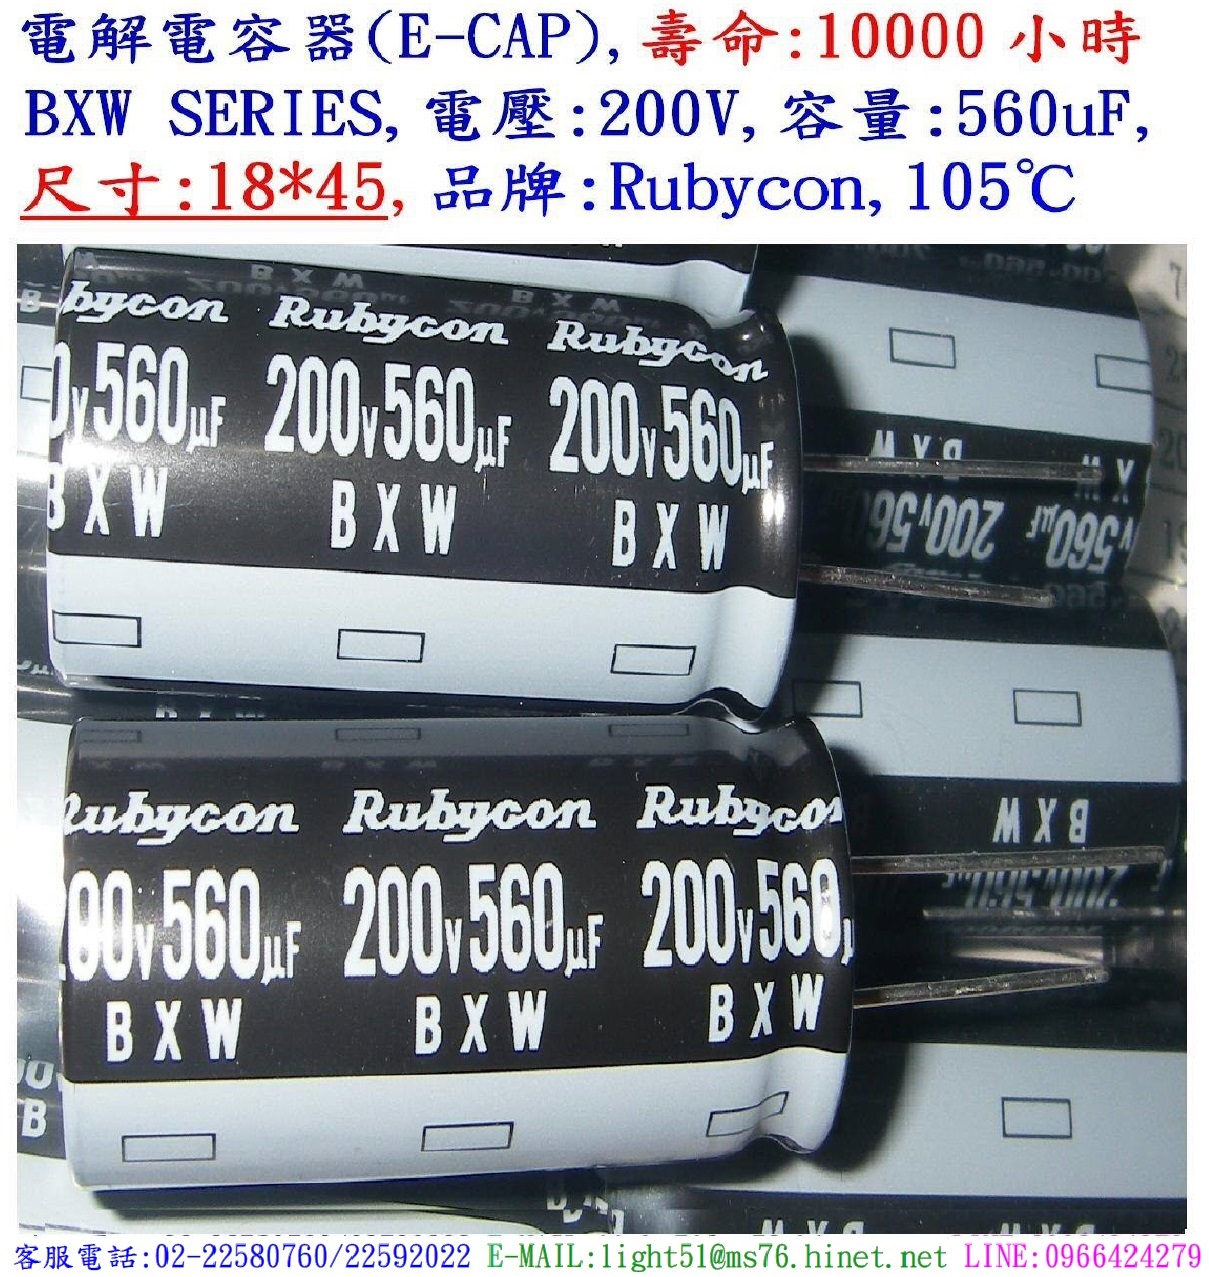 BXW,200V,560uF,尺寸:18*45,電解電容器,壽命:10000小時,Rubycon